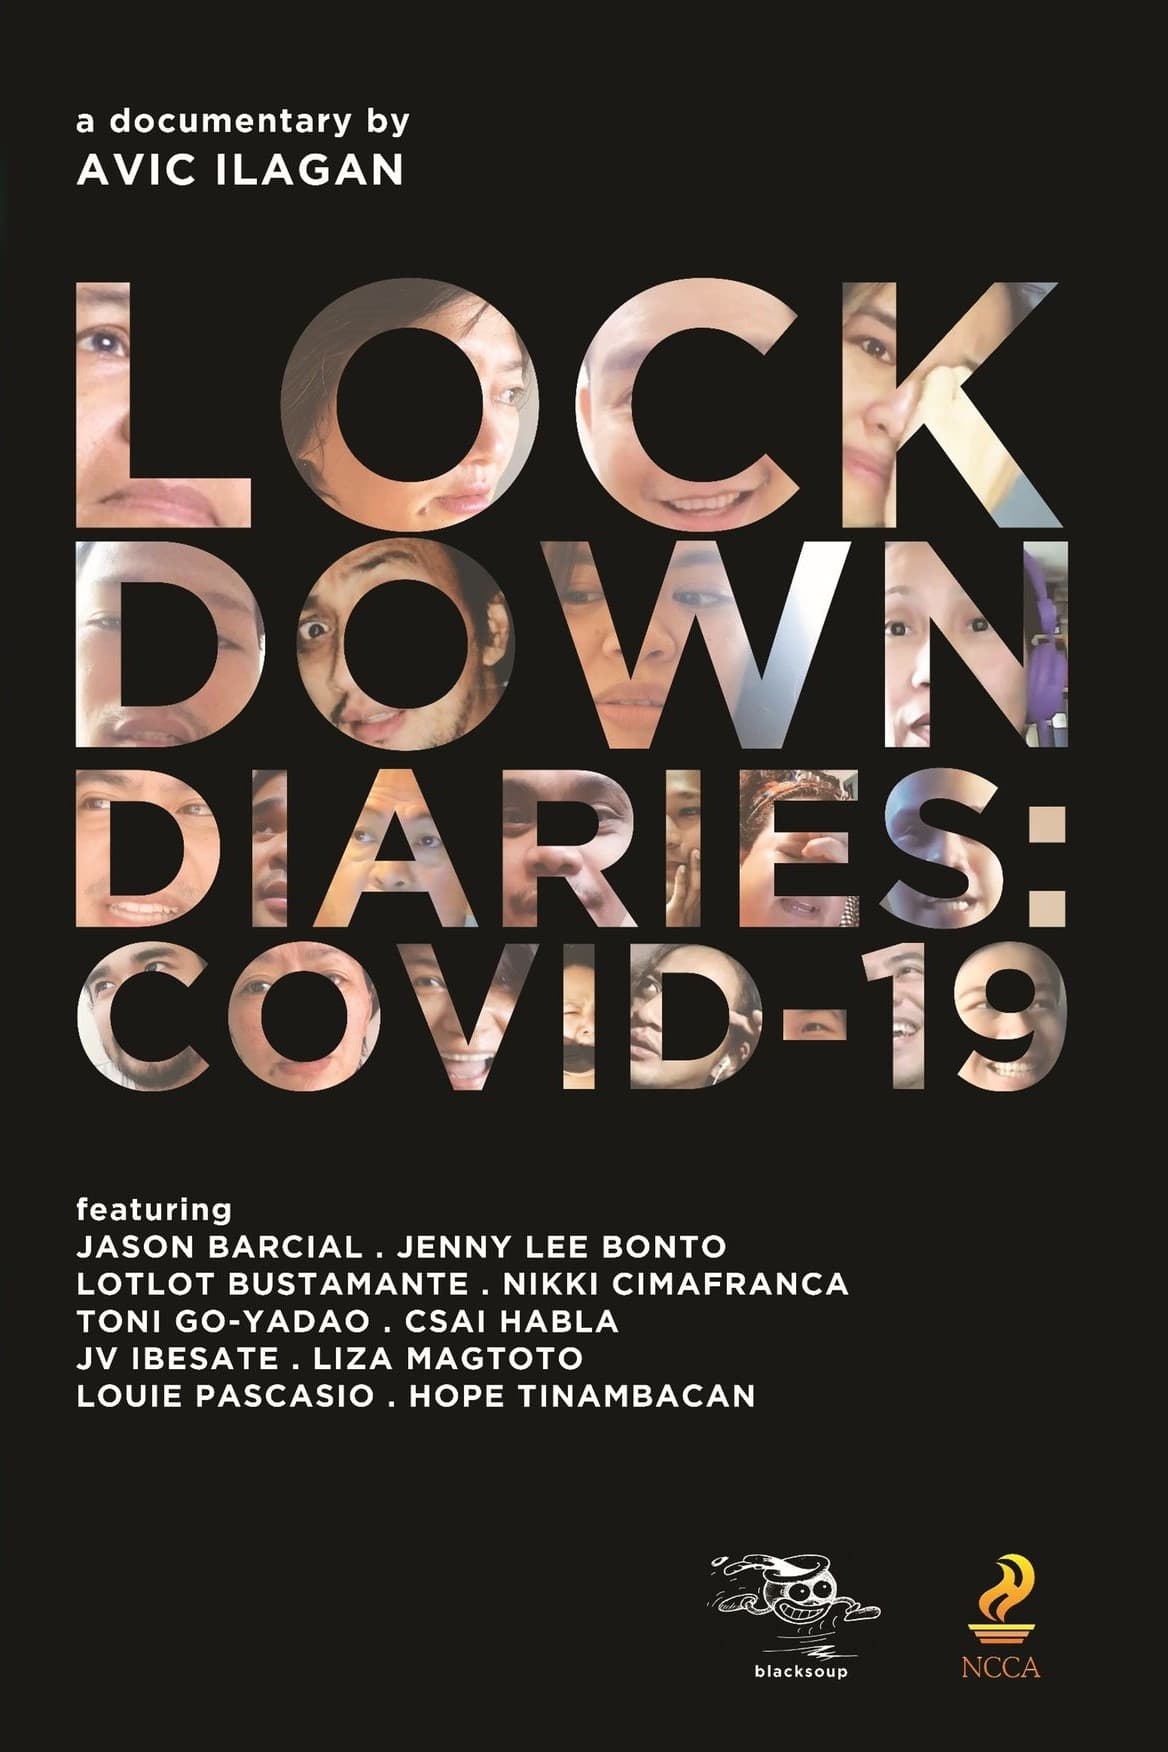 Lockdown Diaries: Covid-19